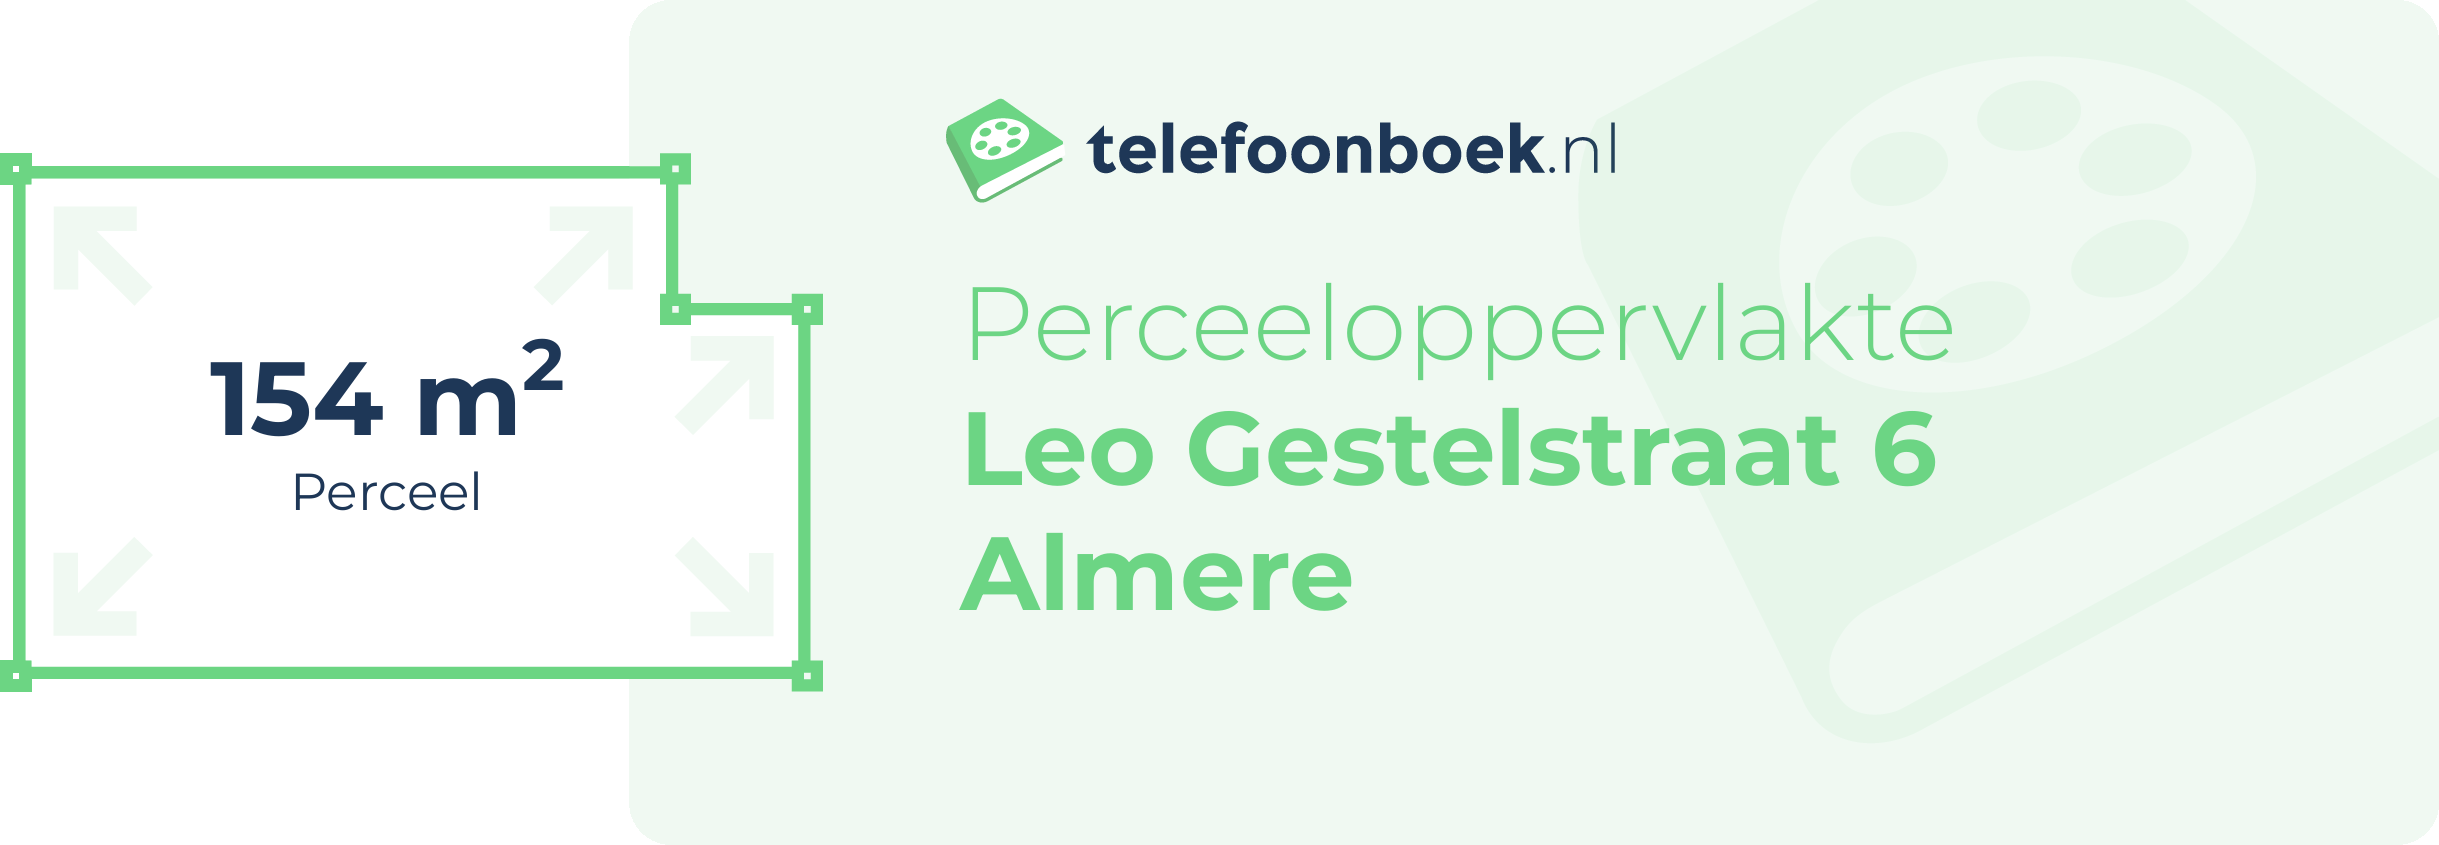 Perceeloppervlakte Leo Gestelstraat 6 Almere